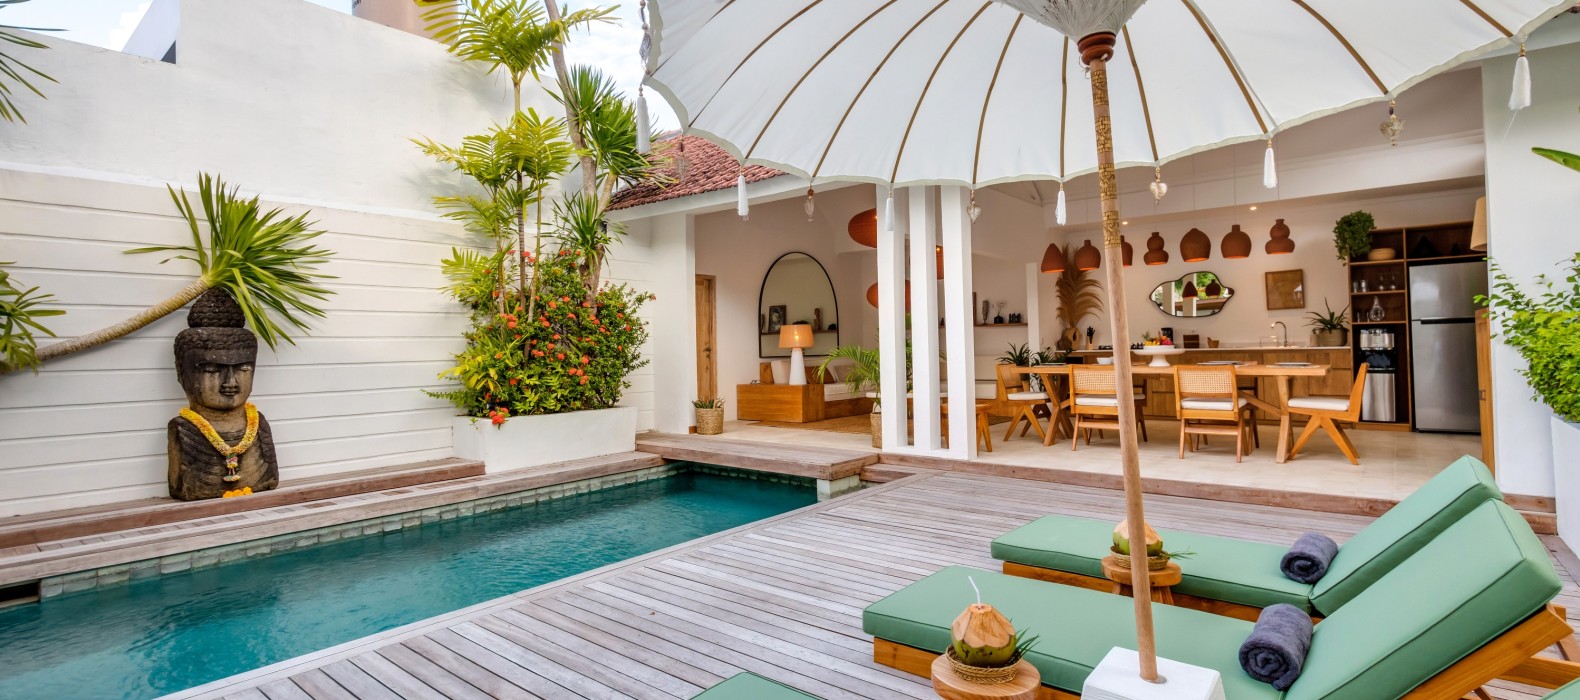 Exterior pool view of Villa Gauguin in Bali